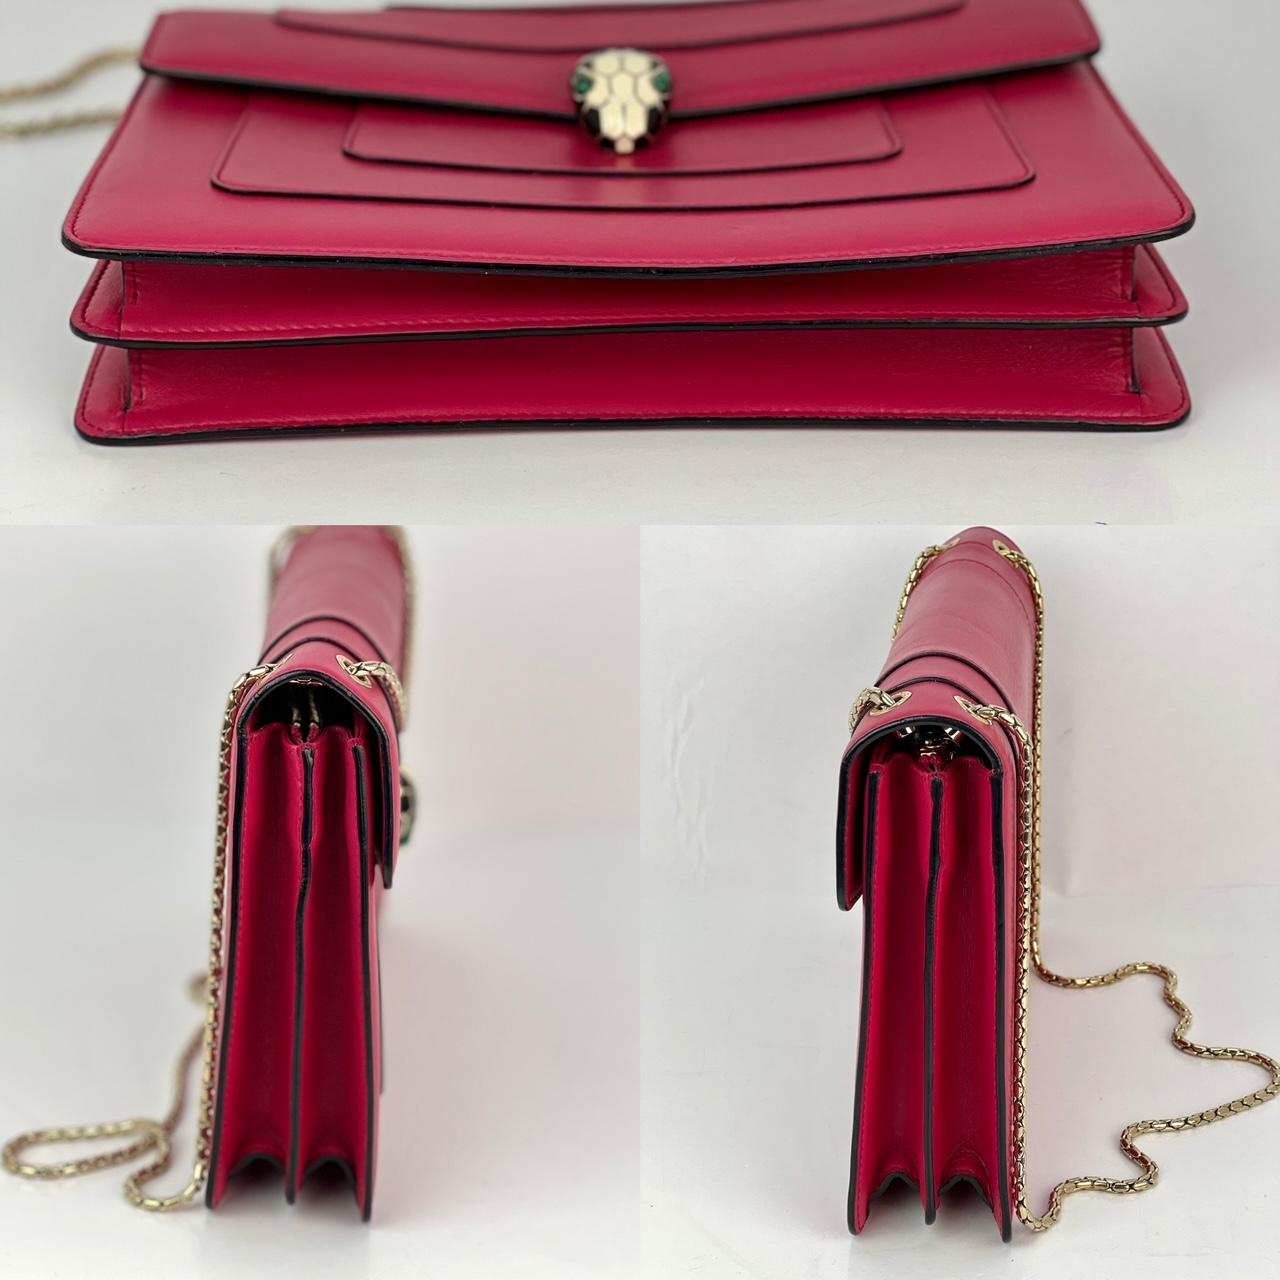 Bulgari Serpenti Forever Dark Pink Shoulder Bag In Excellent Condition For Sale In Freehold, NJ